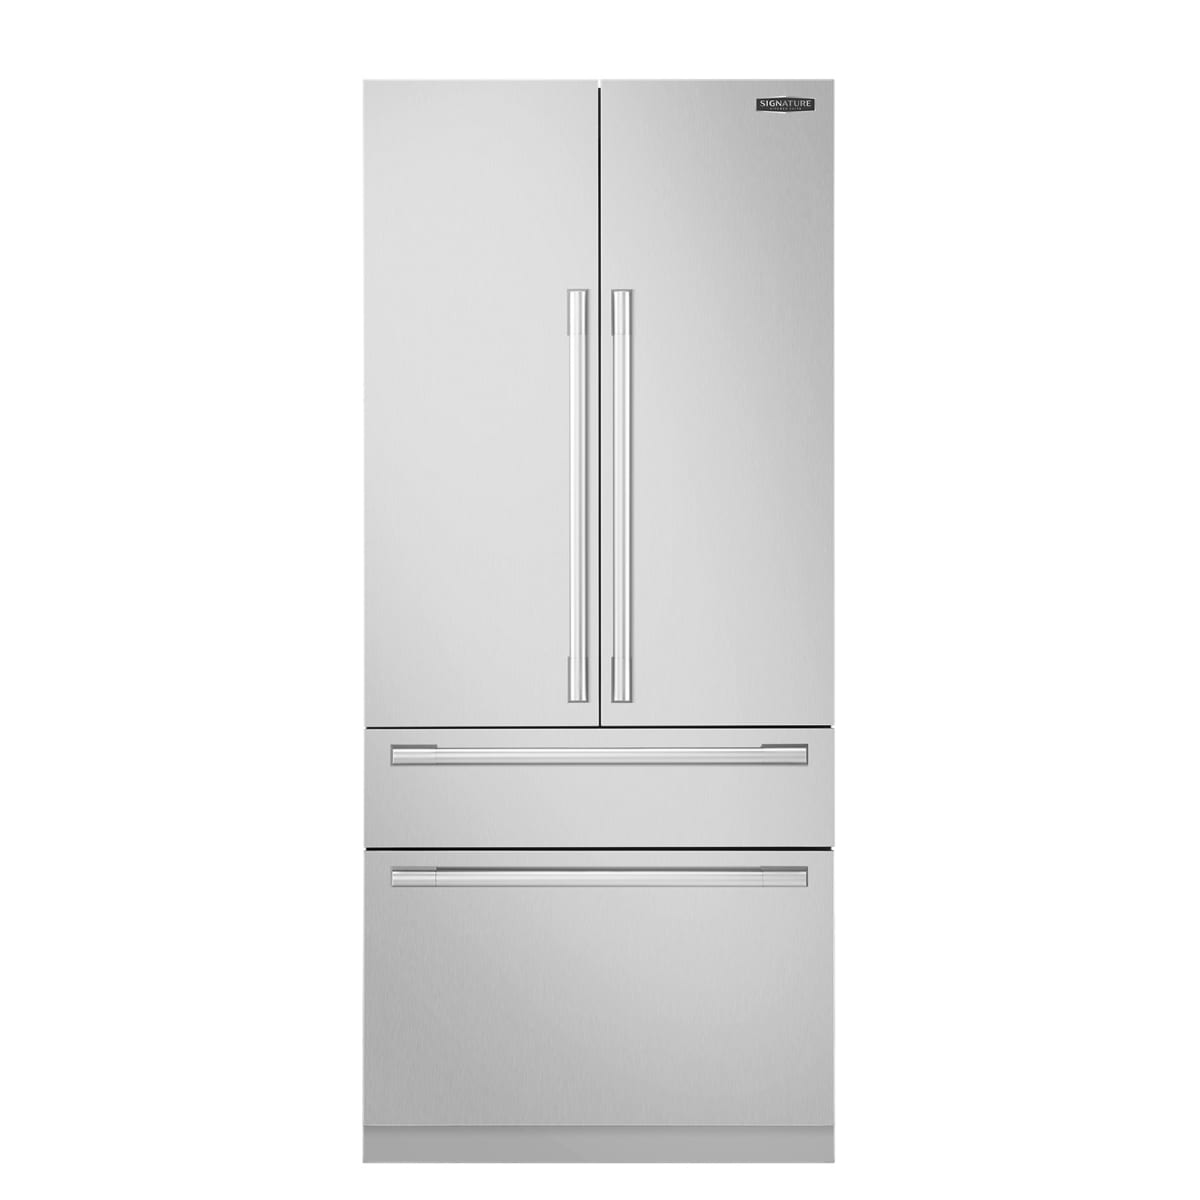 signature-kitchen-suite-sksdw2401s-powersteam-24-inch-wide-build